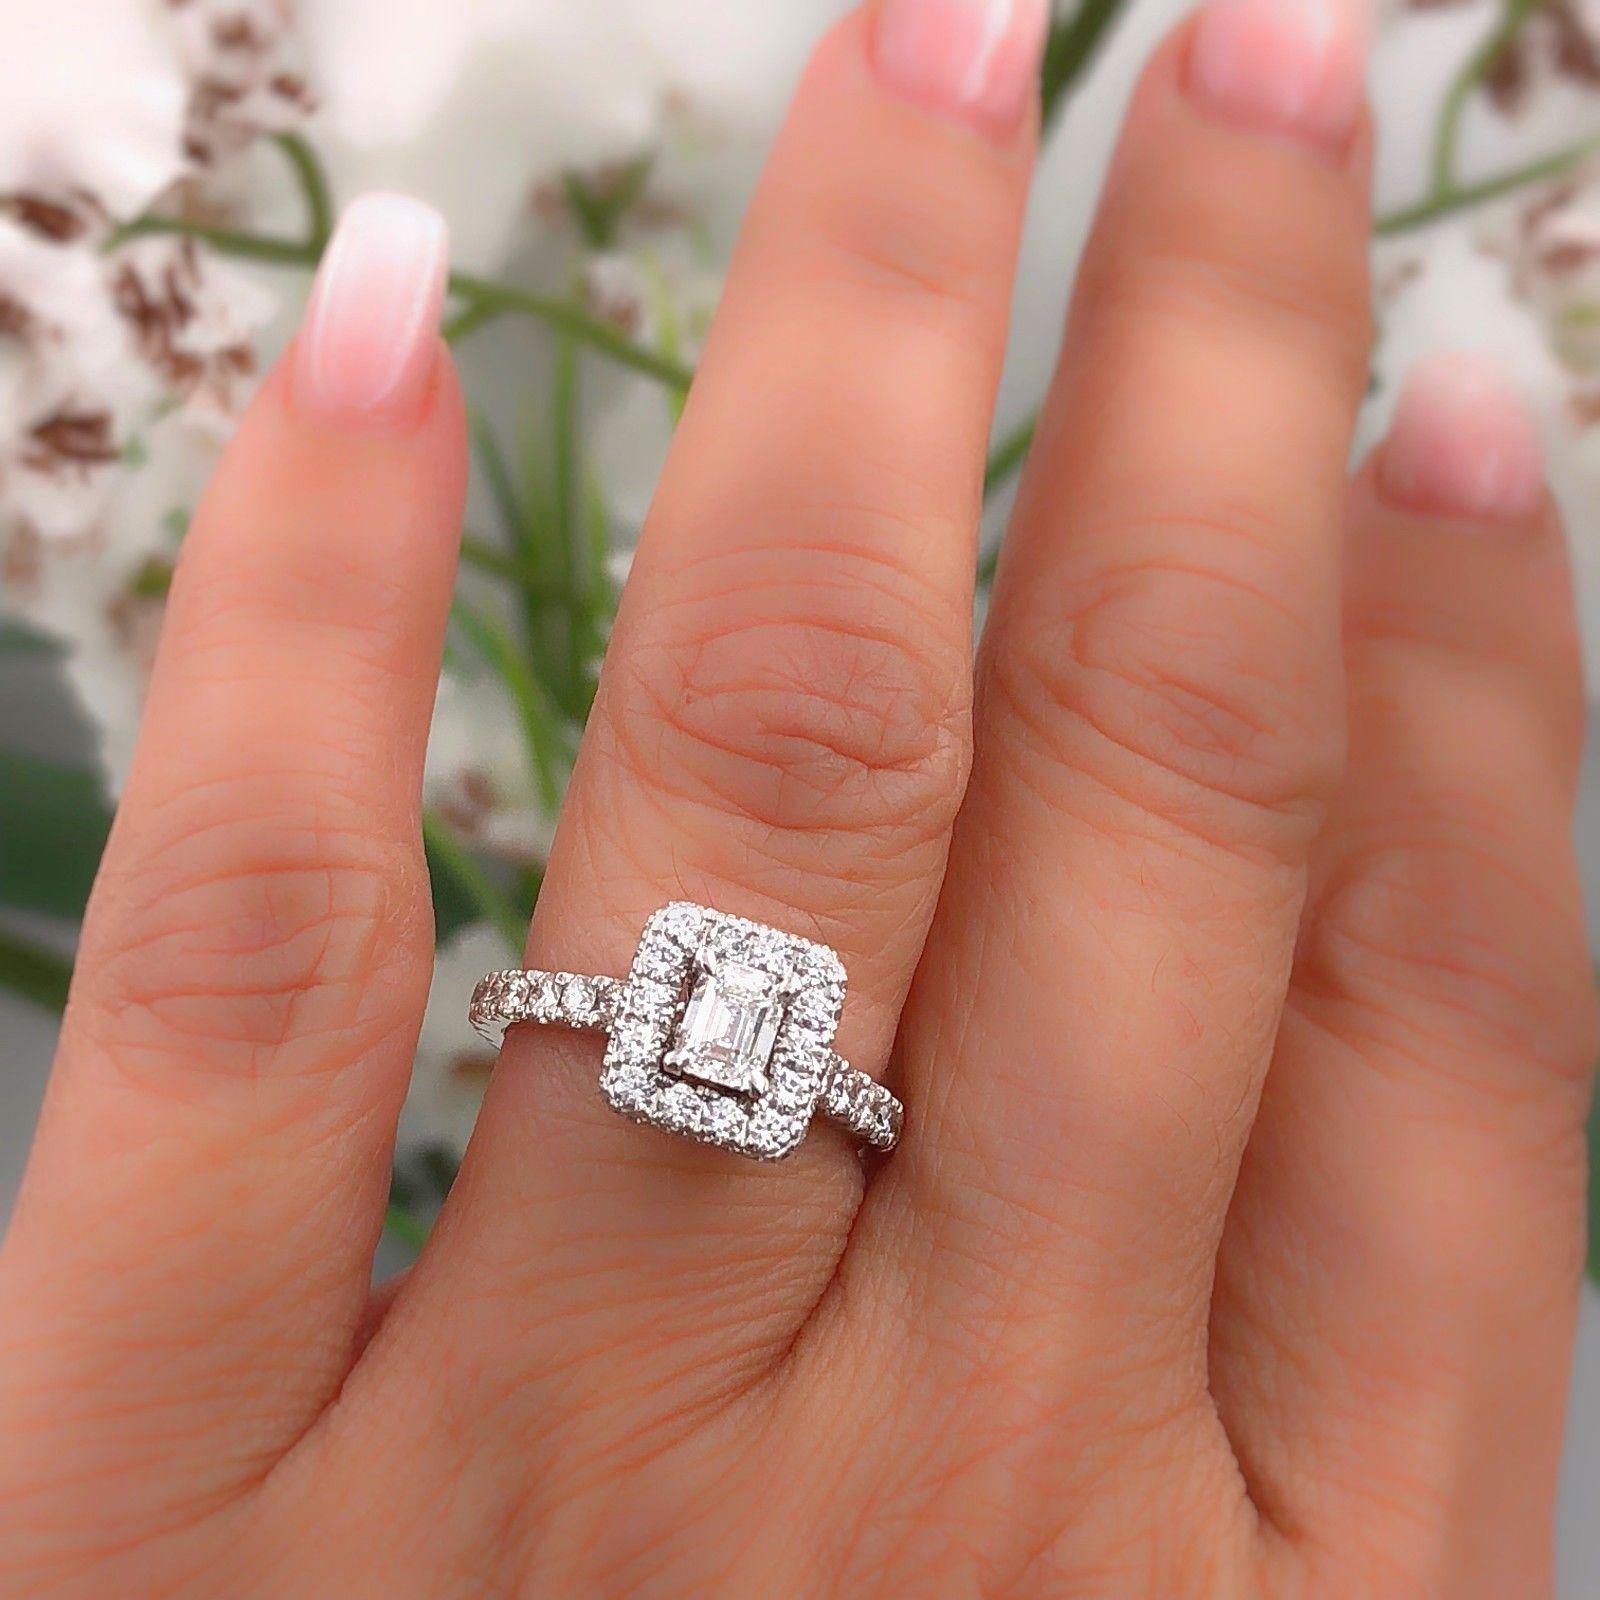 Neil Lane Diamond Engagement Ring Emerald Cut 1.375 Carat in 14 Karat White Gold For Sale 6